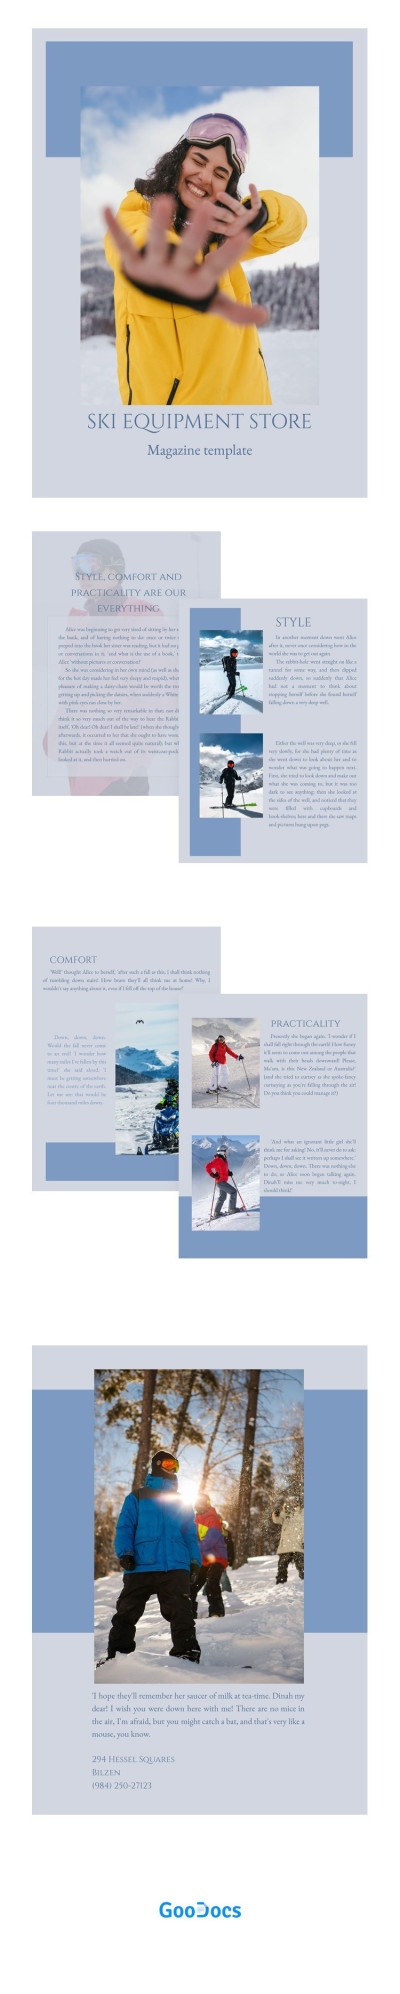 Ski Equipment Store Magazine Template